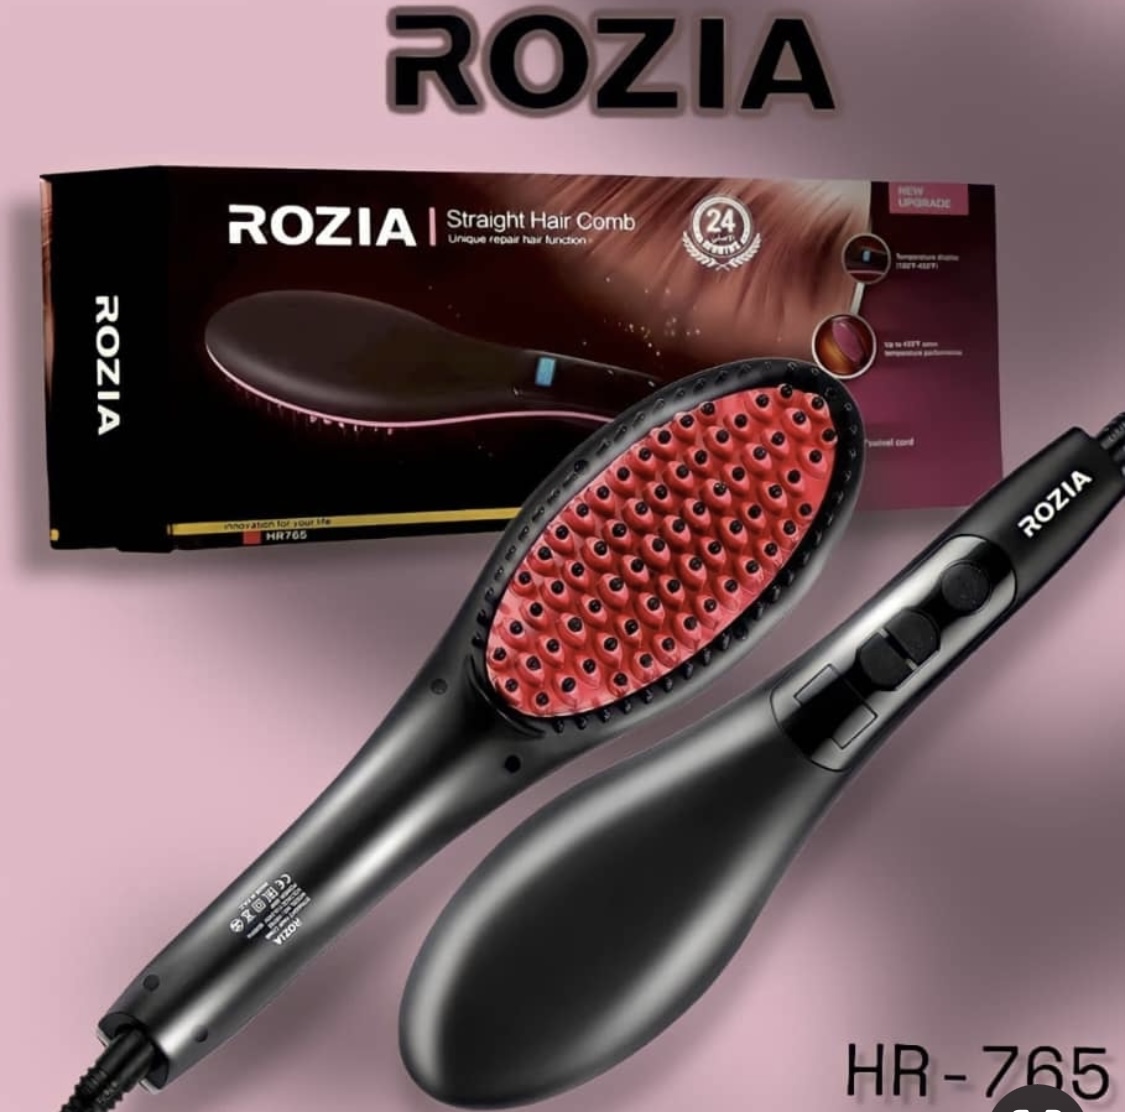 برس حرارتی روزیا مدل HR765 ا Rosia thermal brush, HR765 model